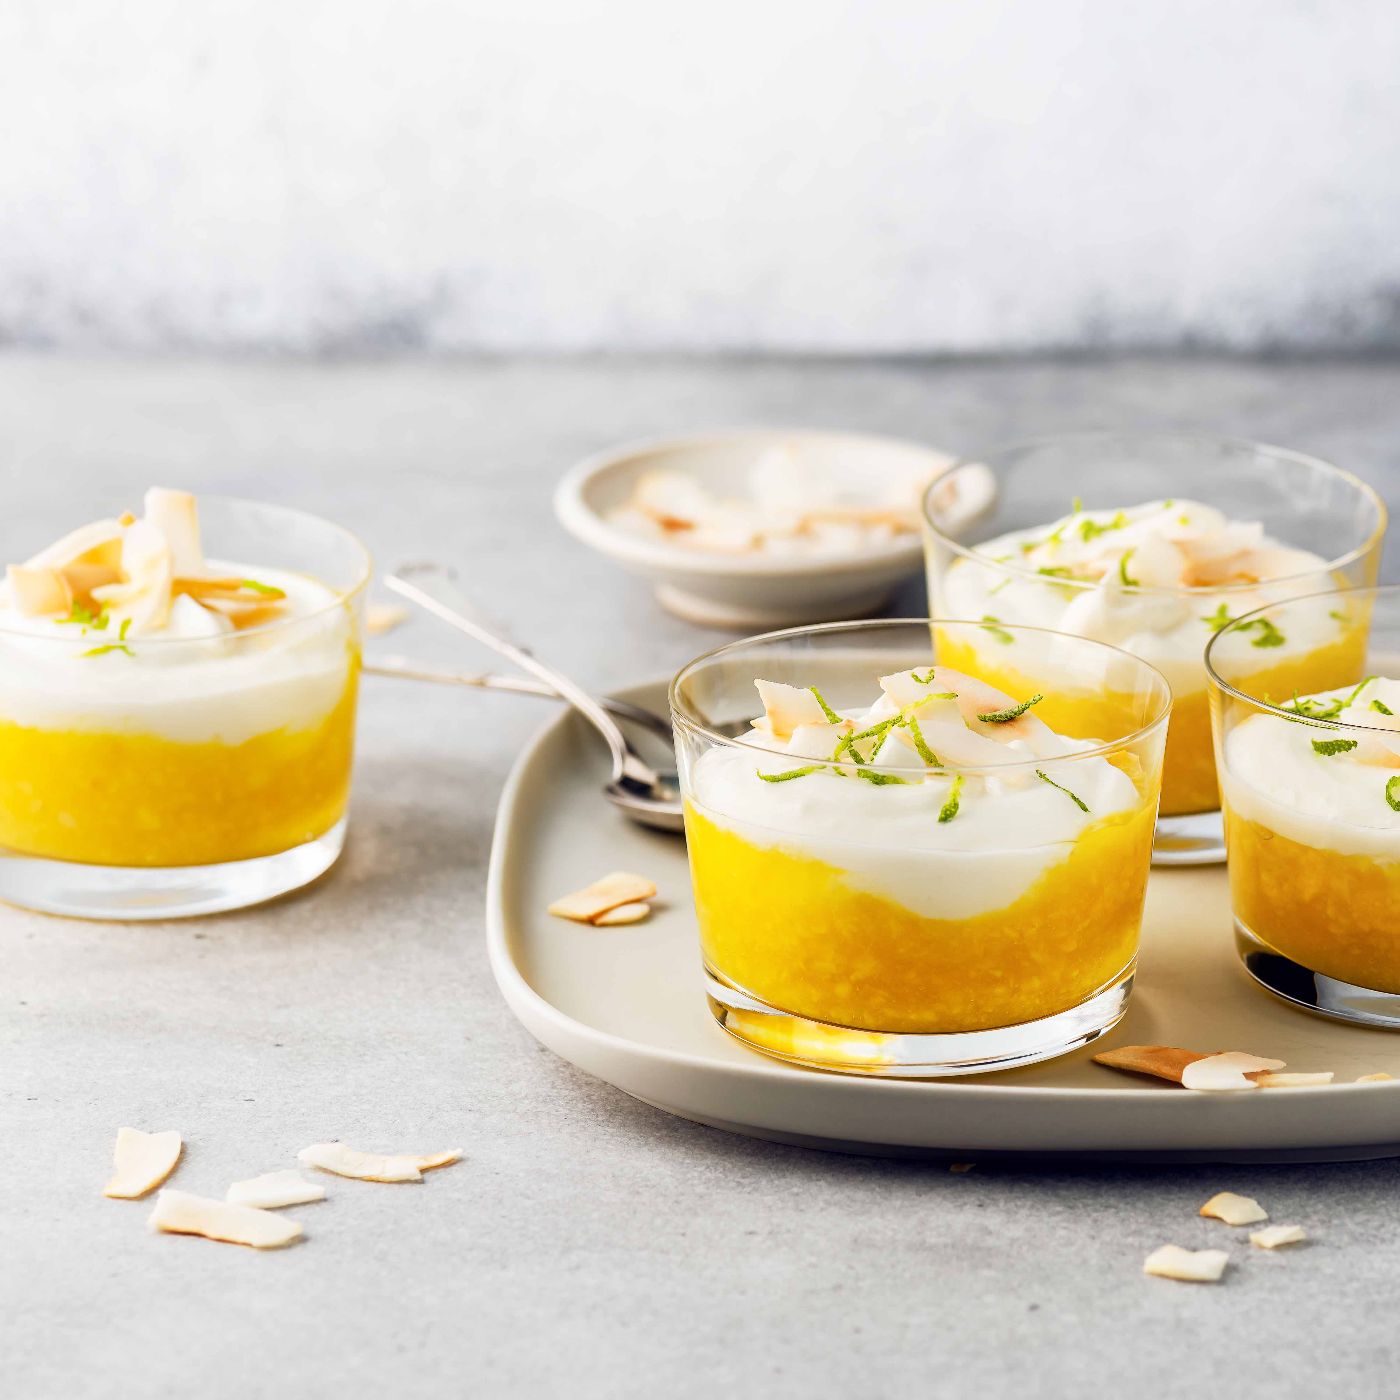 Vegetarian-fruit-cream-dessert-with-coconut-milk-curd-and-mango-puree-in-glass-jars.-1370435551_6436x4597_square.jpg